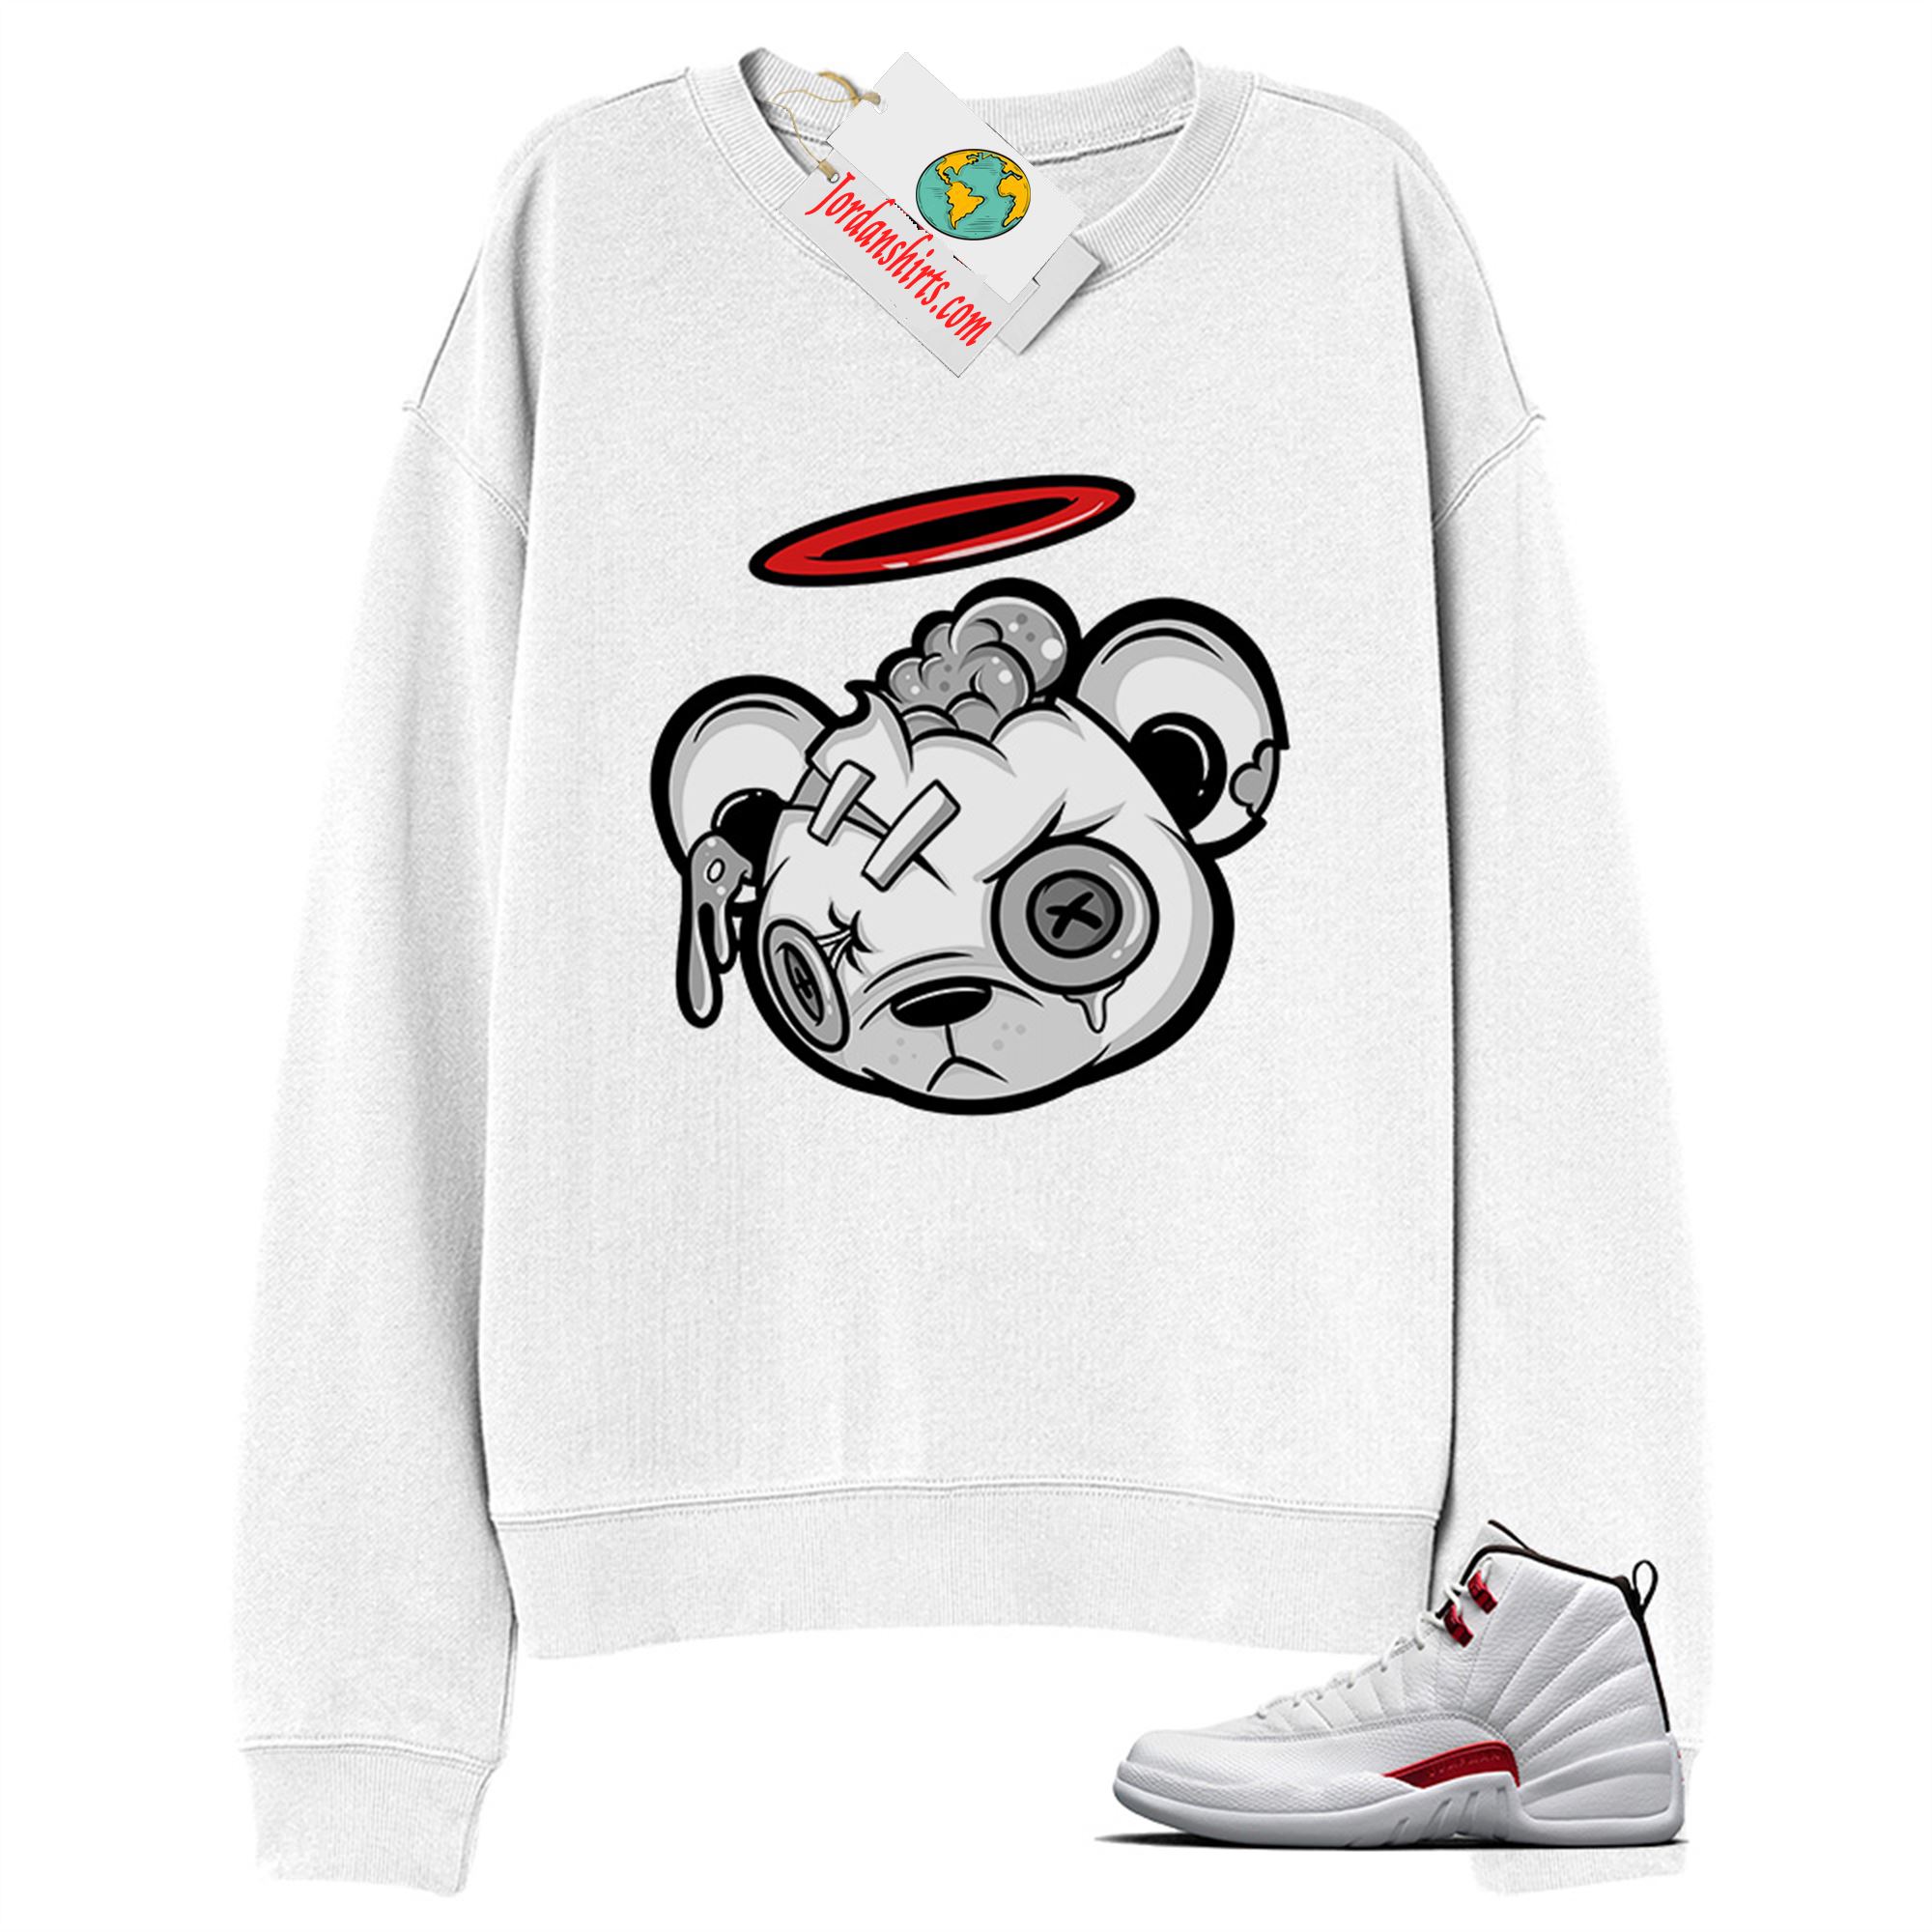 Jordan 12 Sweatshirt, Teddy Bear With Angel Ring White Sweatshirt Air Jordan 12 Twist 12s Size Up To 5xl